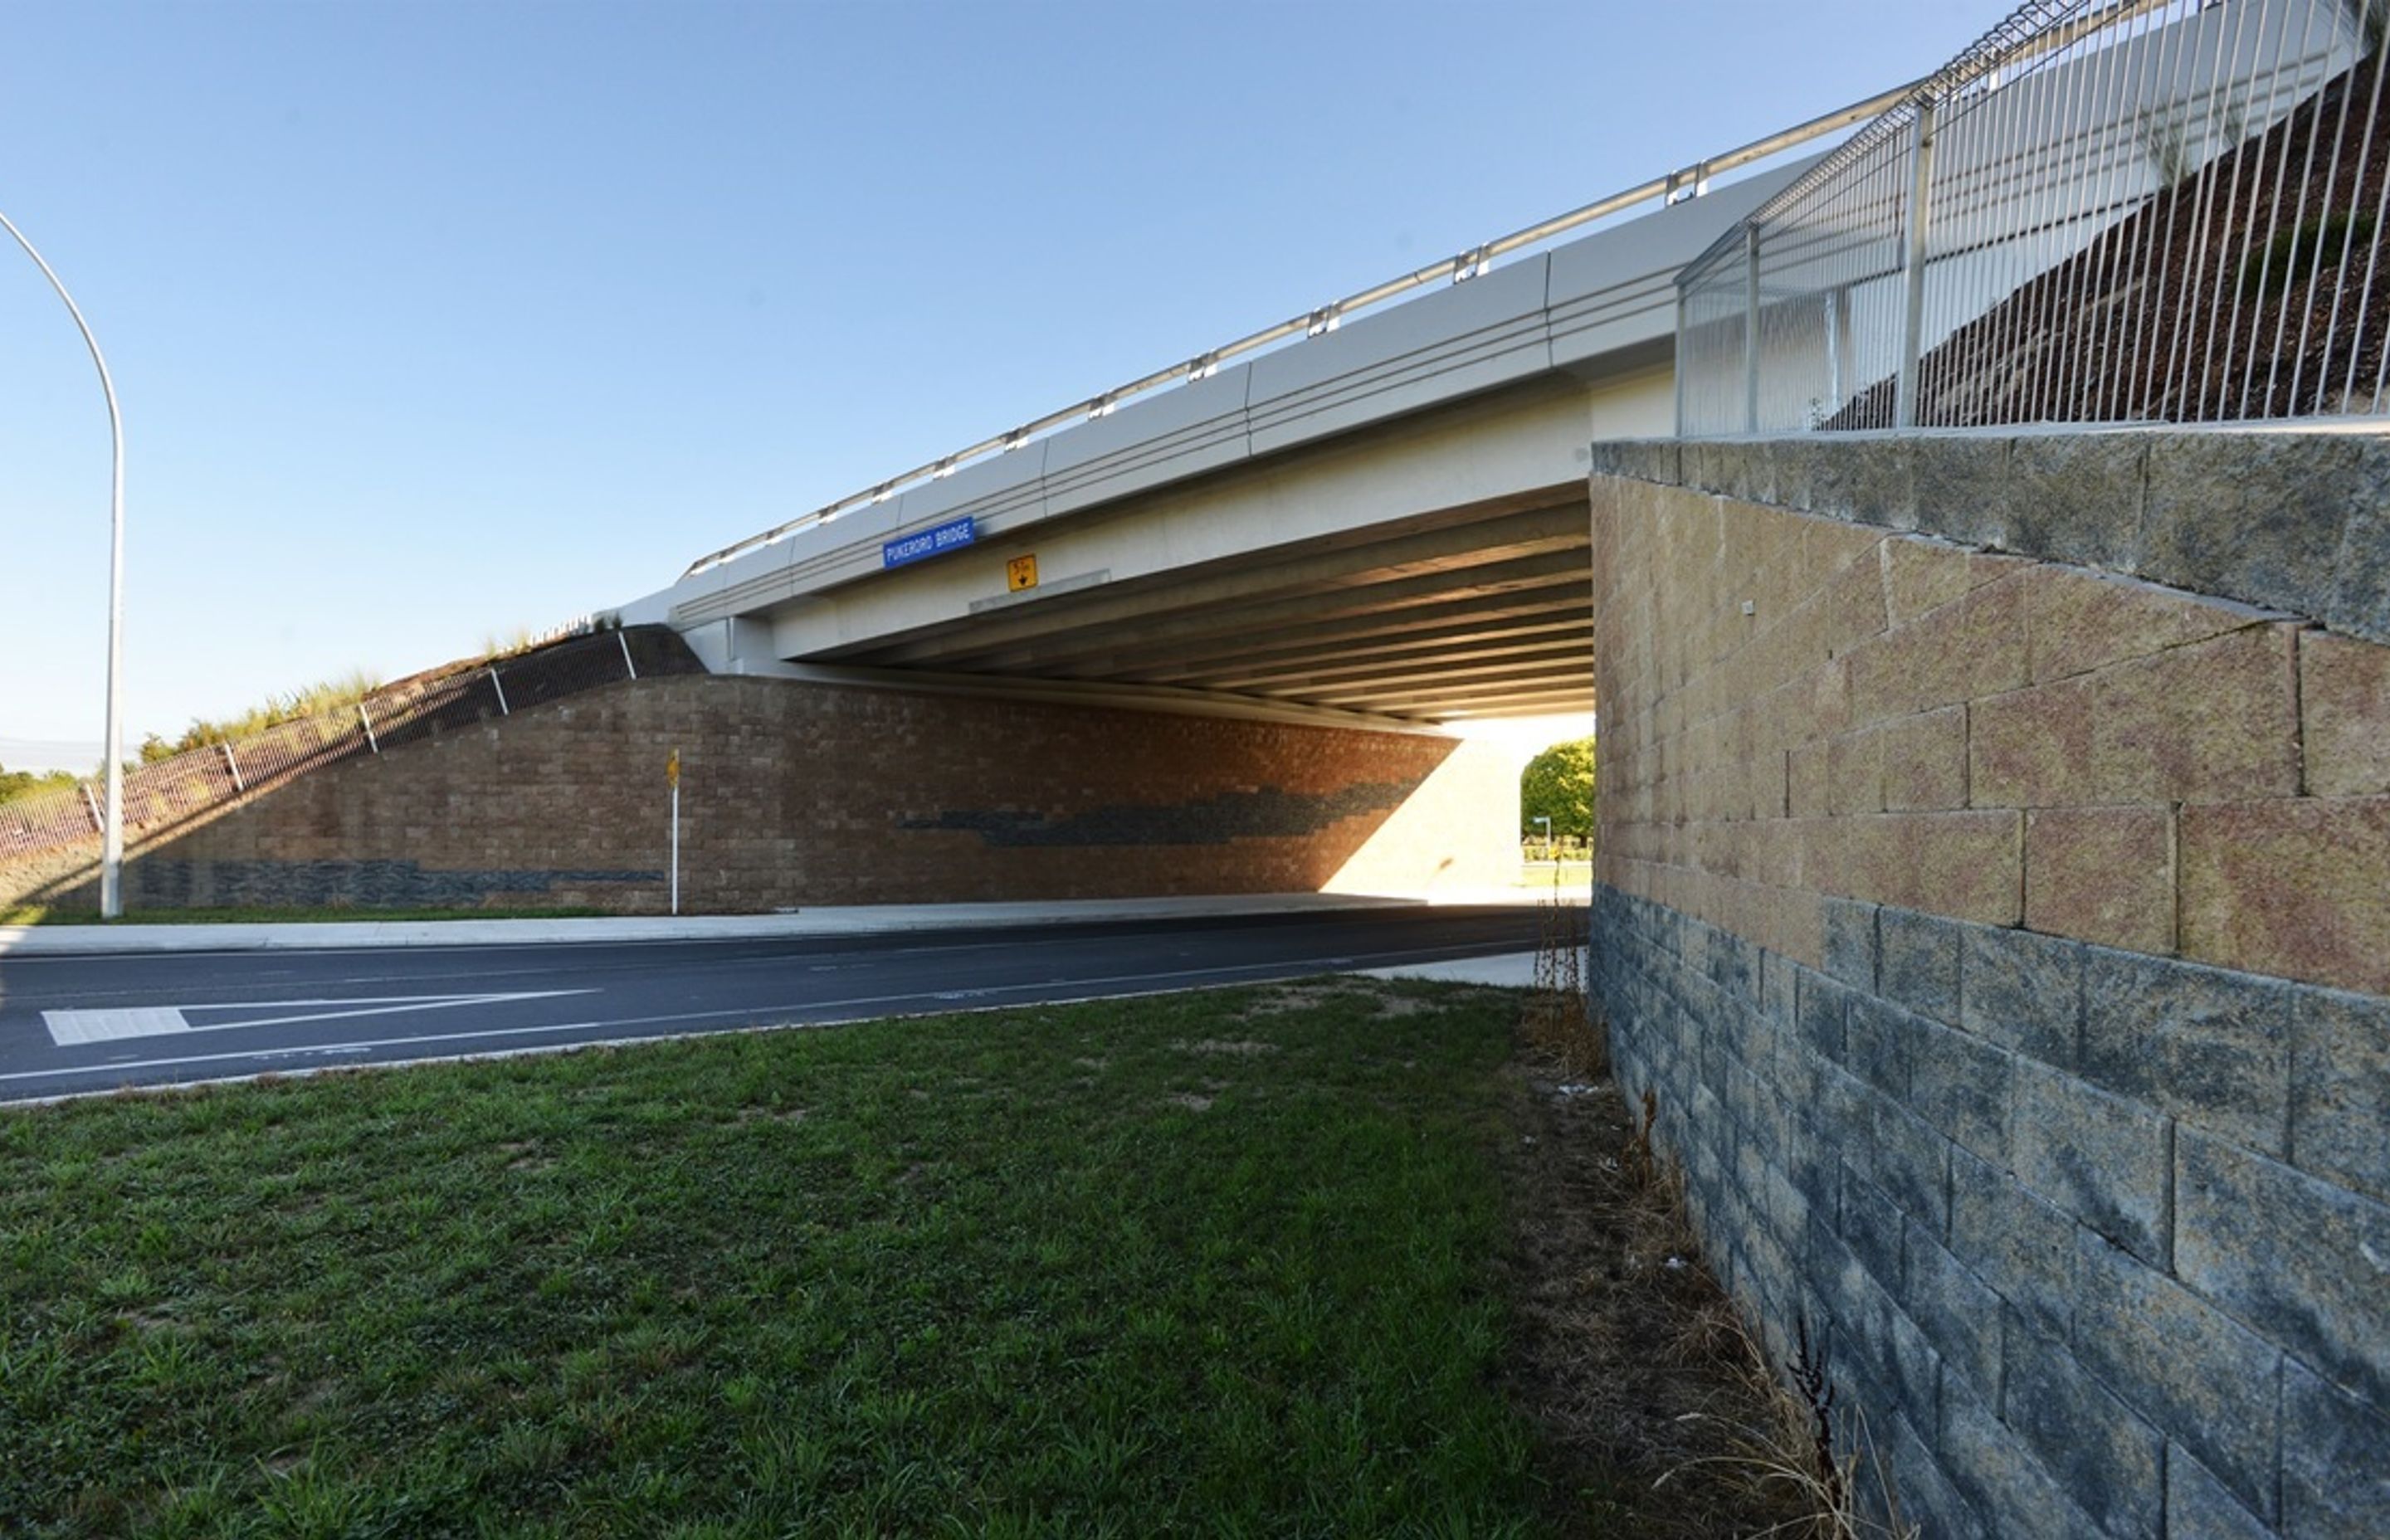 Cambridge Tamahere Expressway - Firth Keysteel® retaining wall system